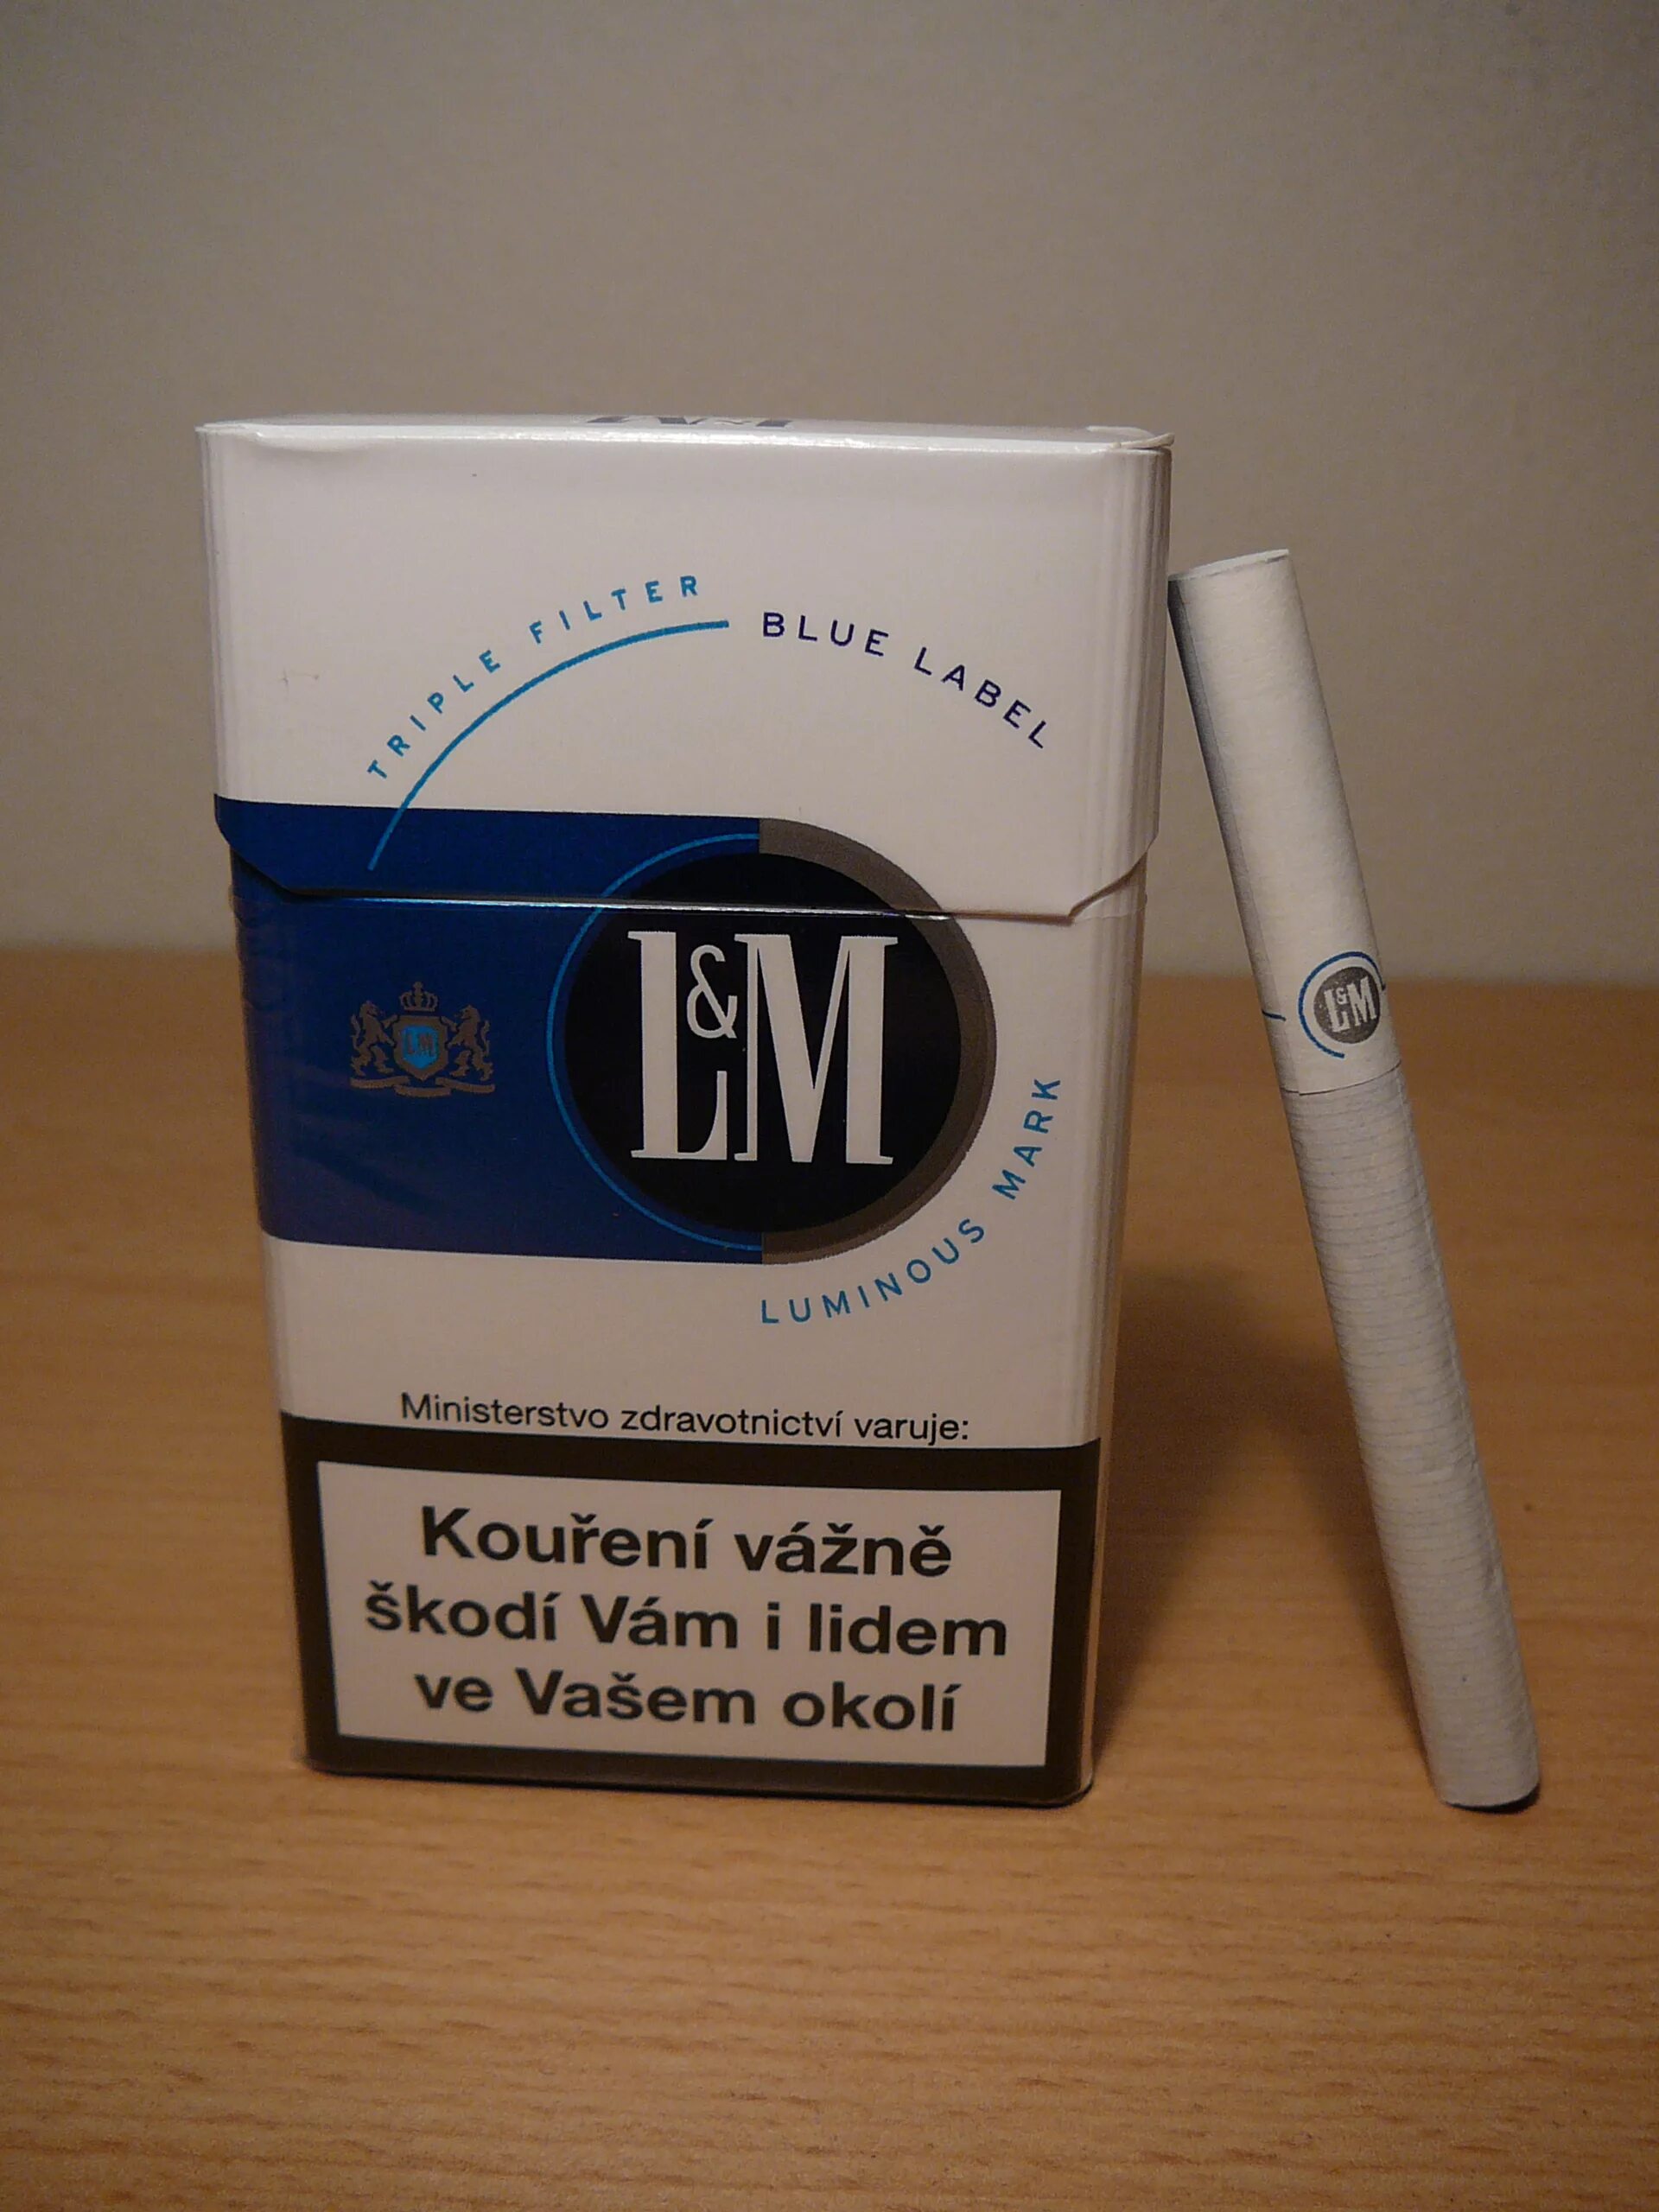 Сигареты лм синие. Сигареты лм компакт. LM Compact Blue. LM Blue Label сигареты.